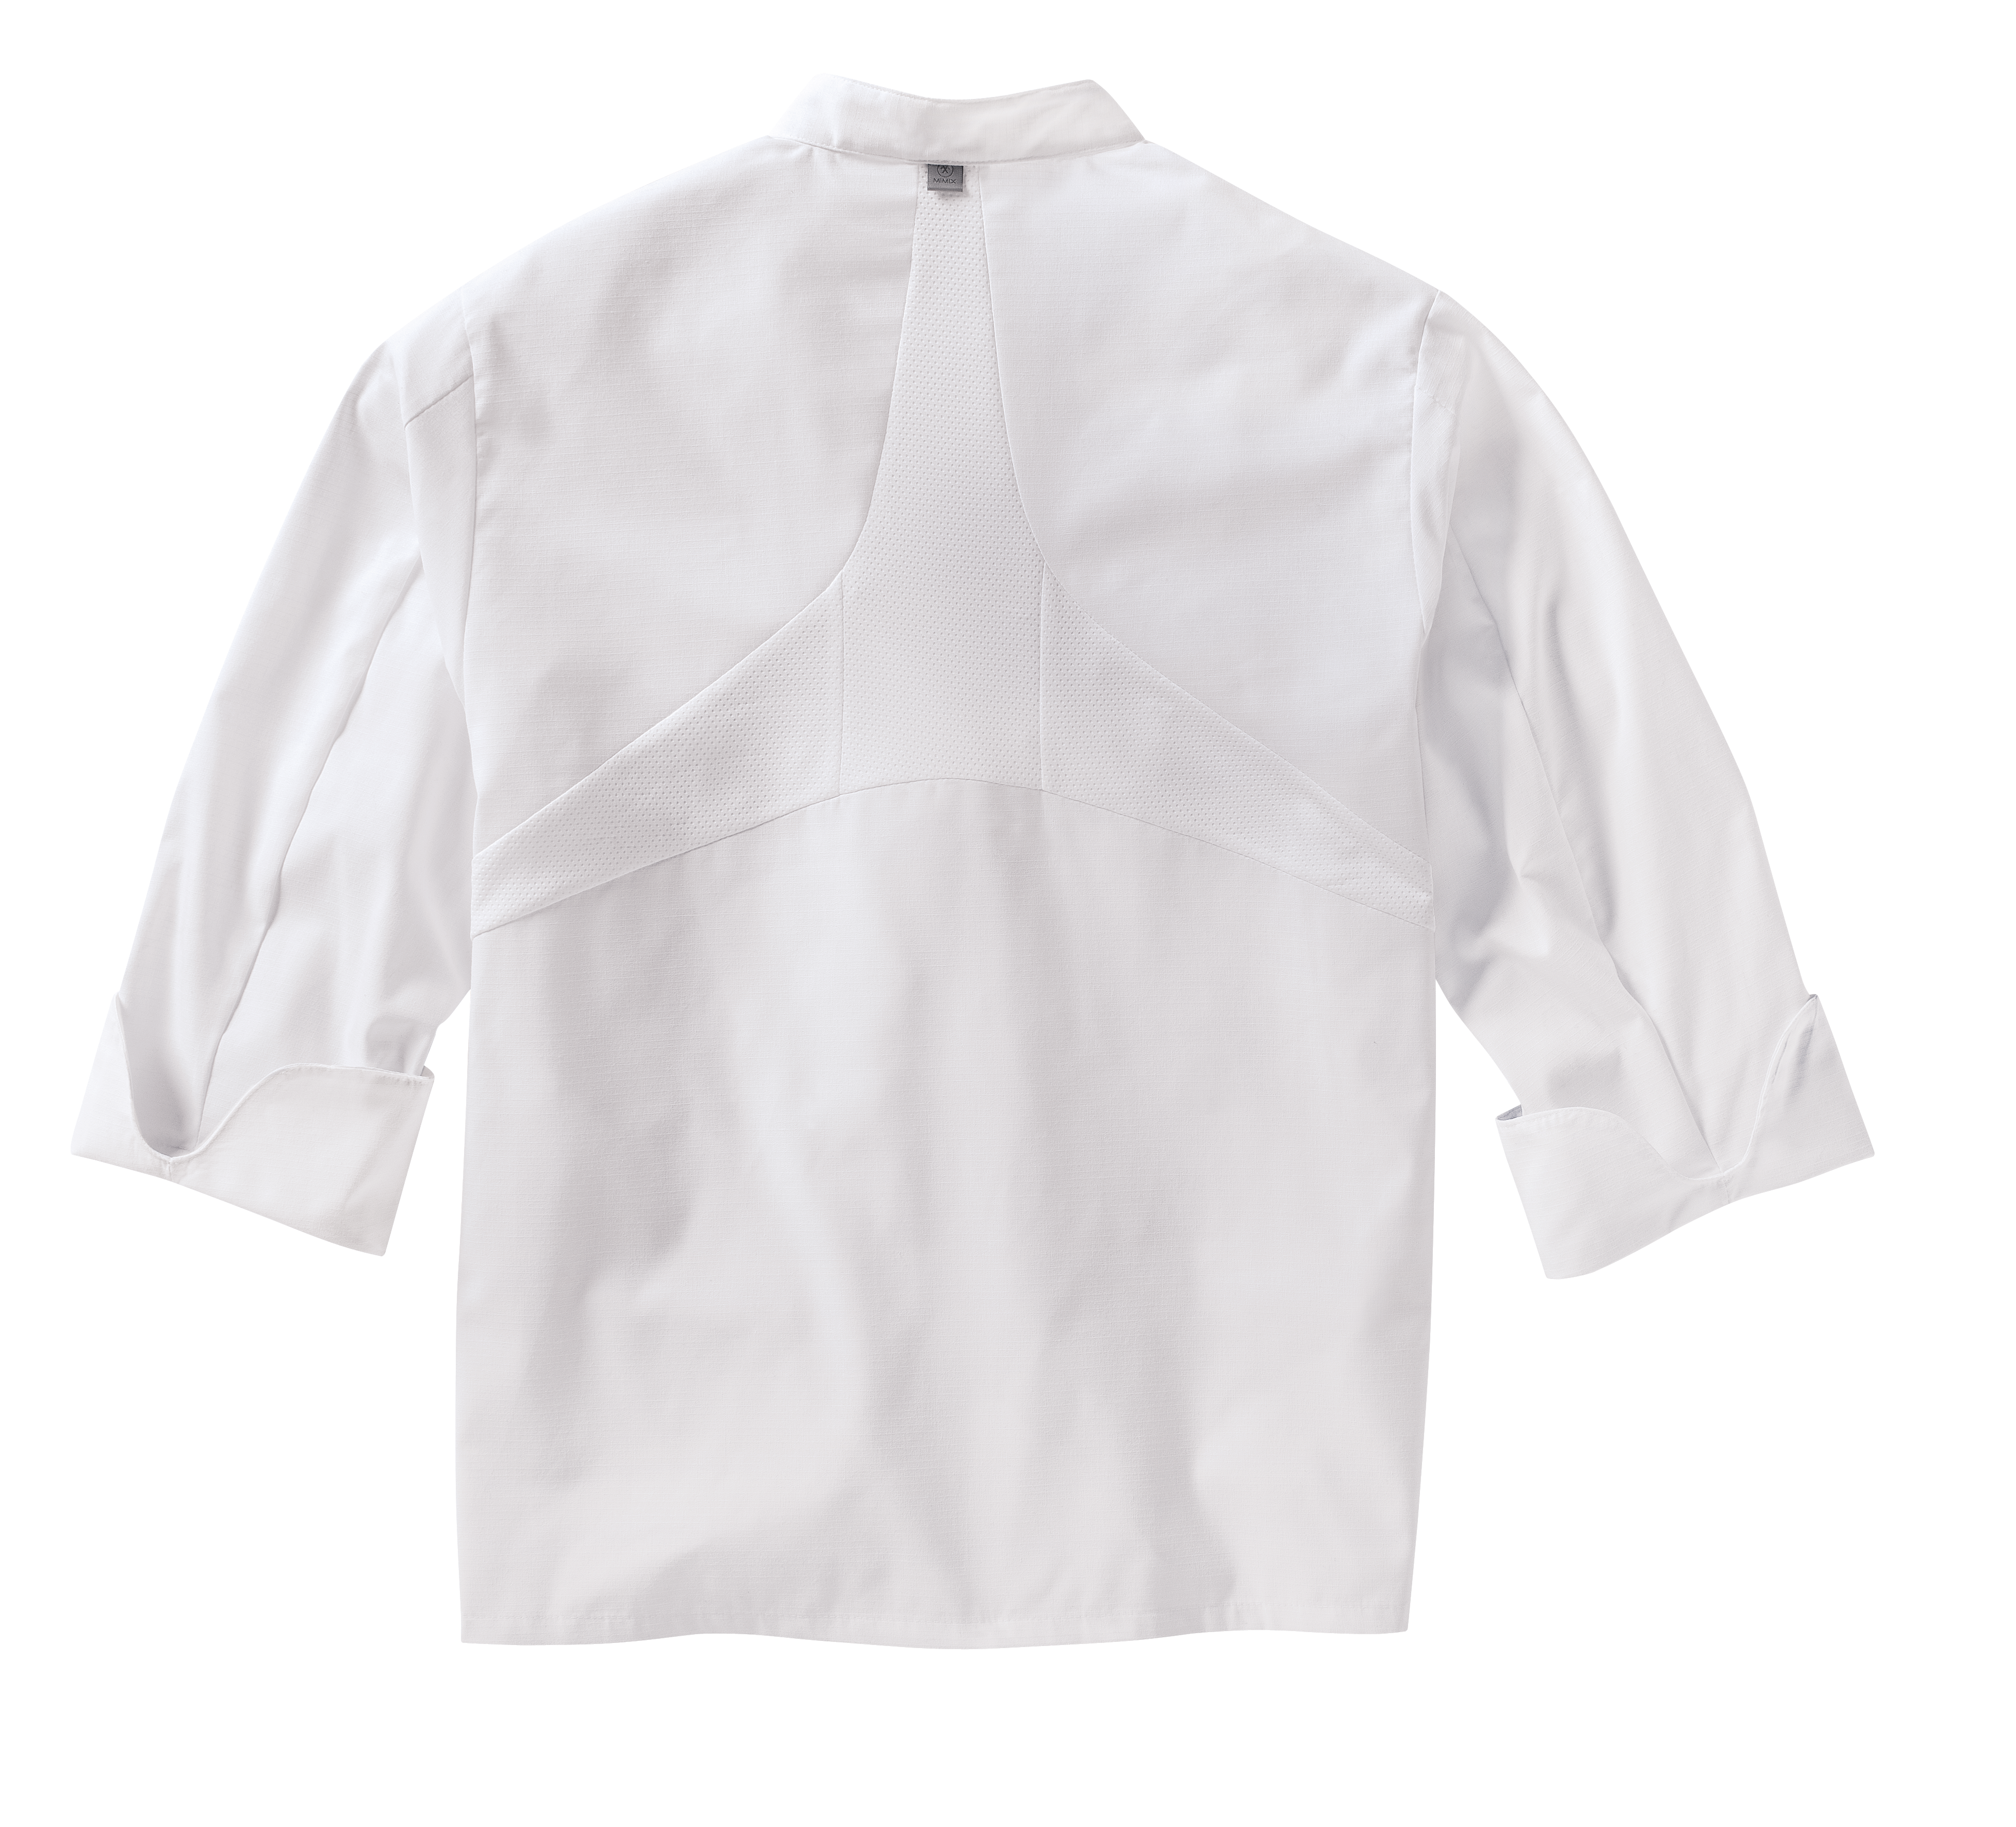 New Master Tunic Chef Coat White With Black Cuffs Size M w/free black apron& hat 